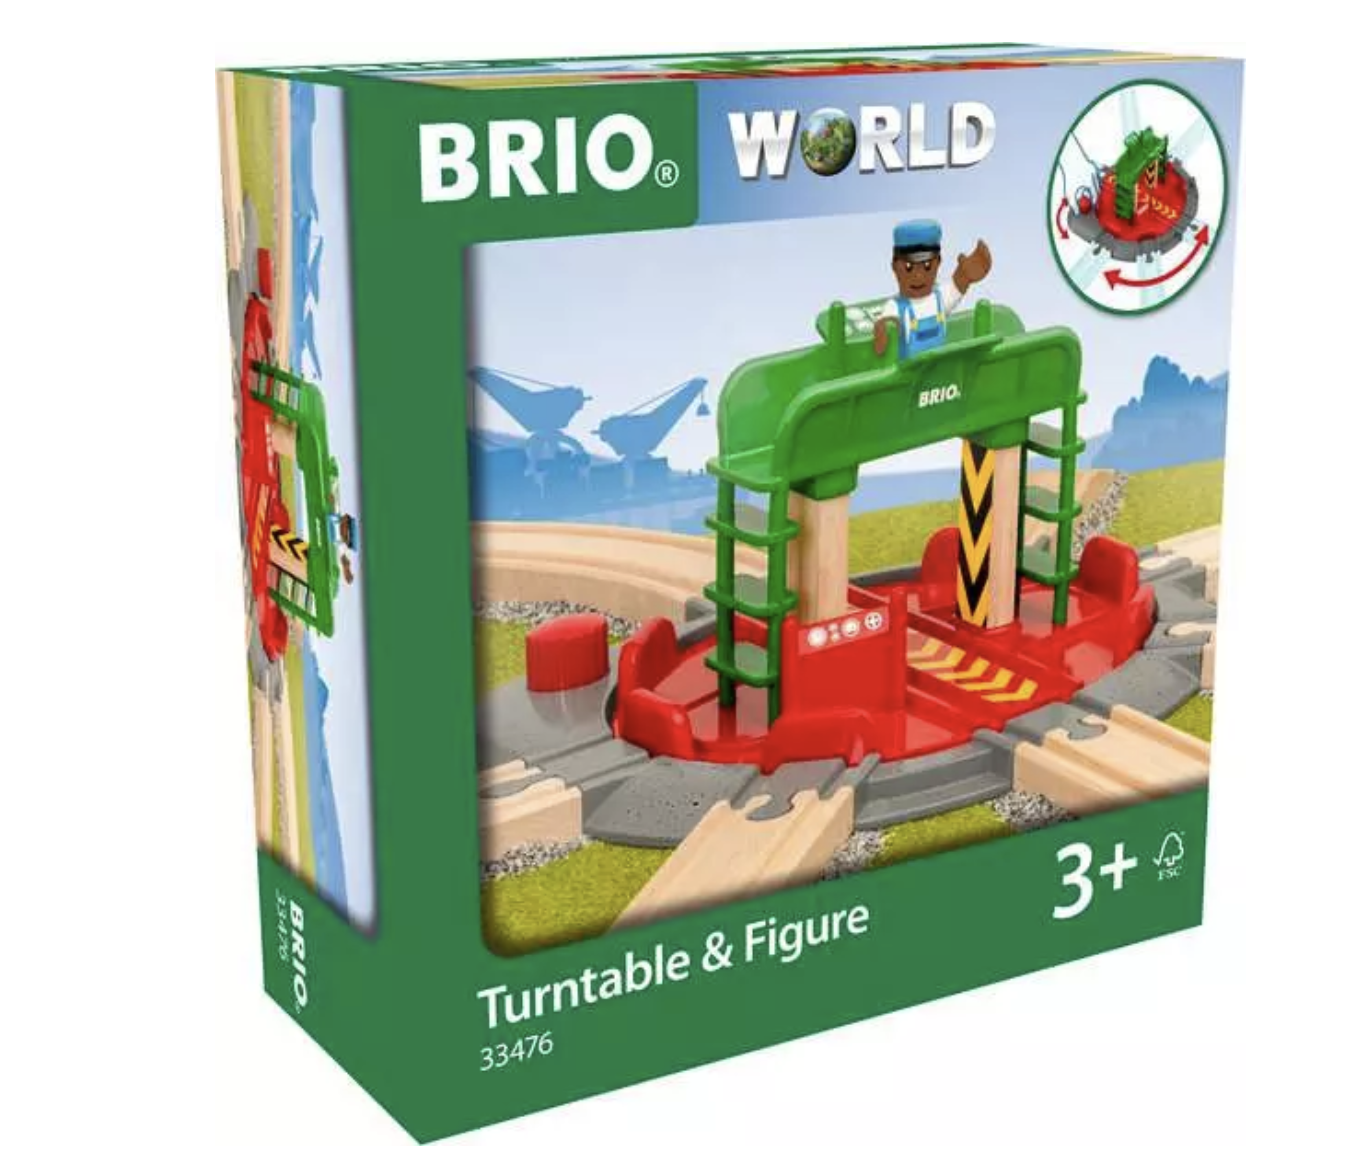 Brio World Turntable & Figure – World of Mirth